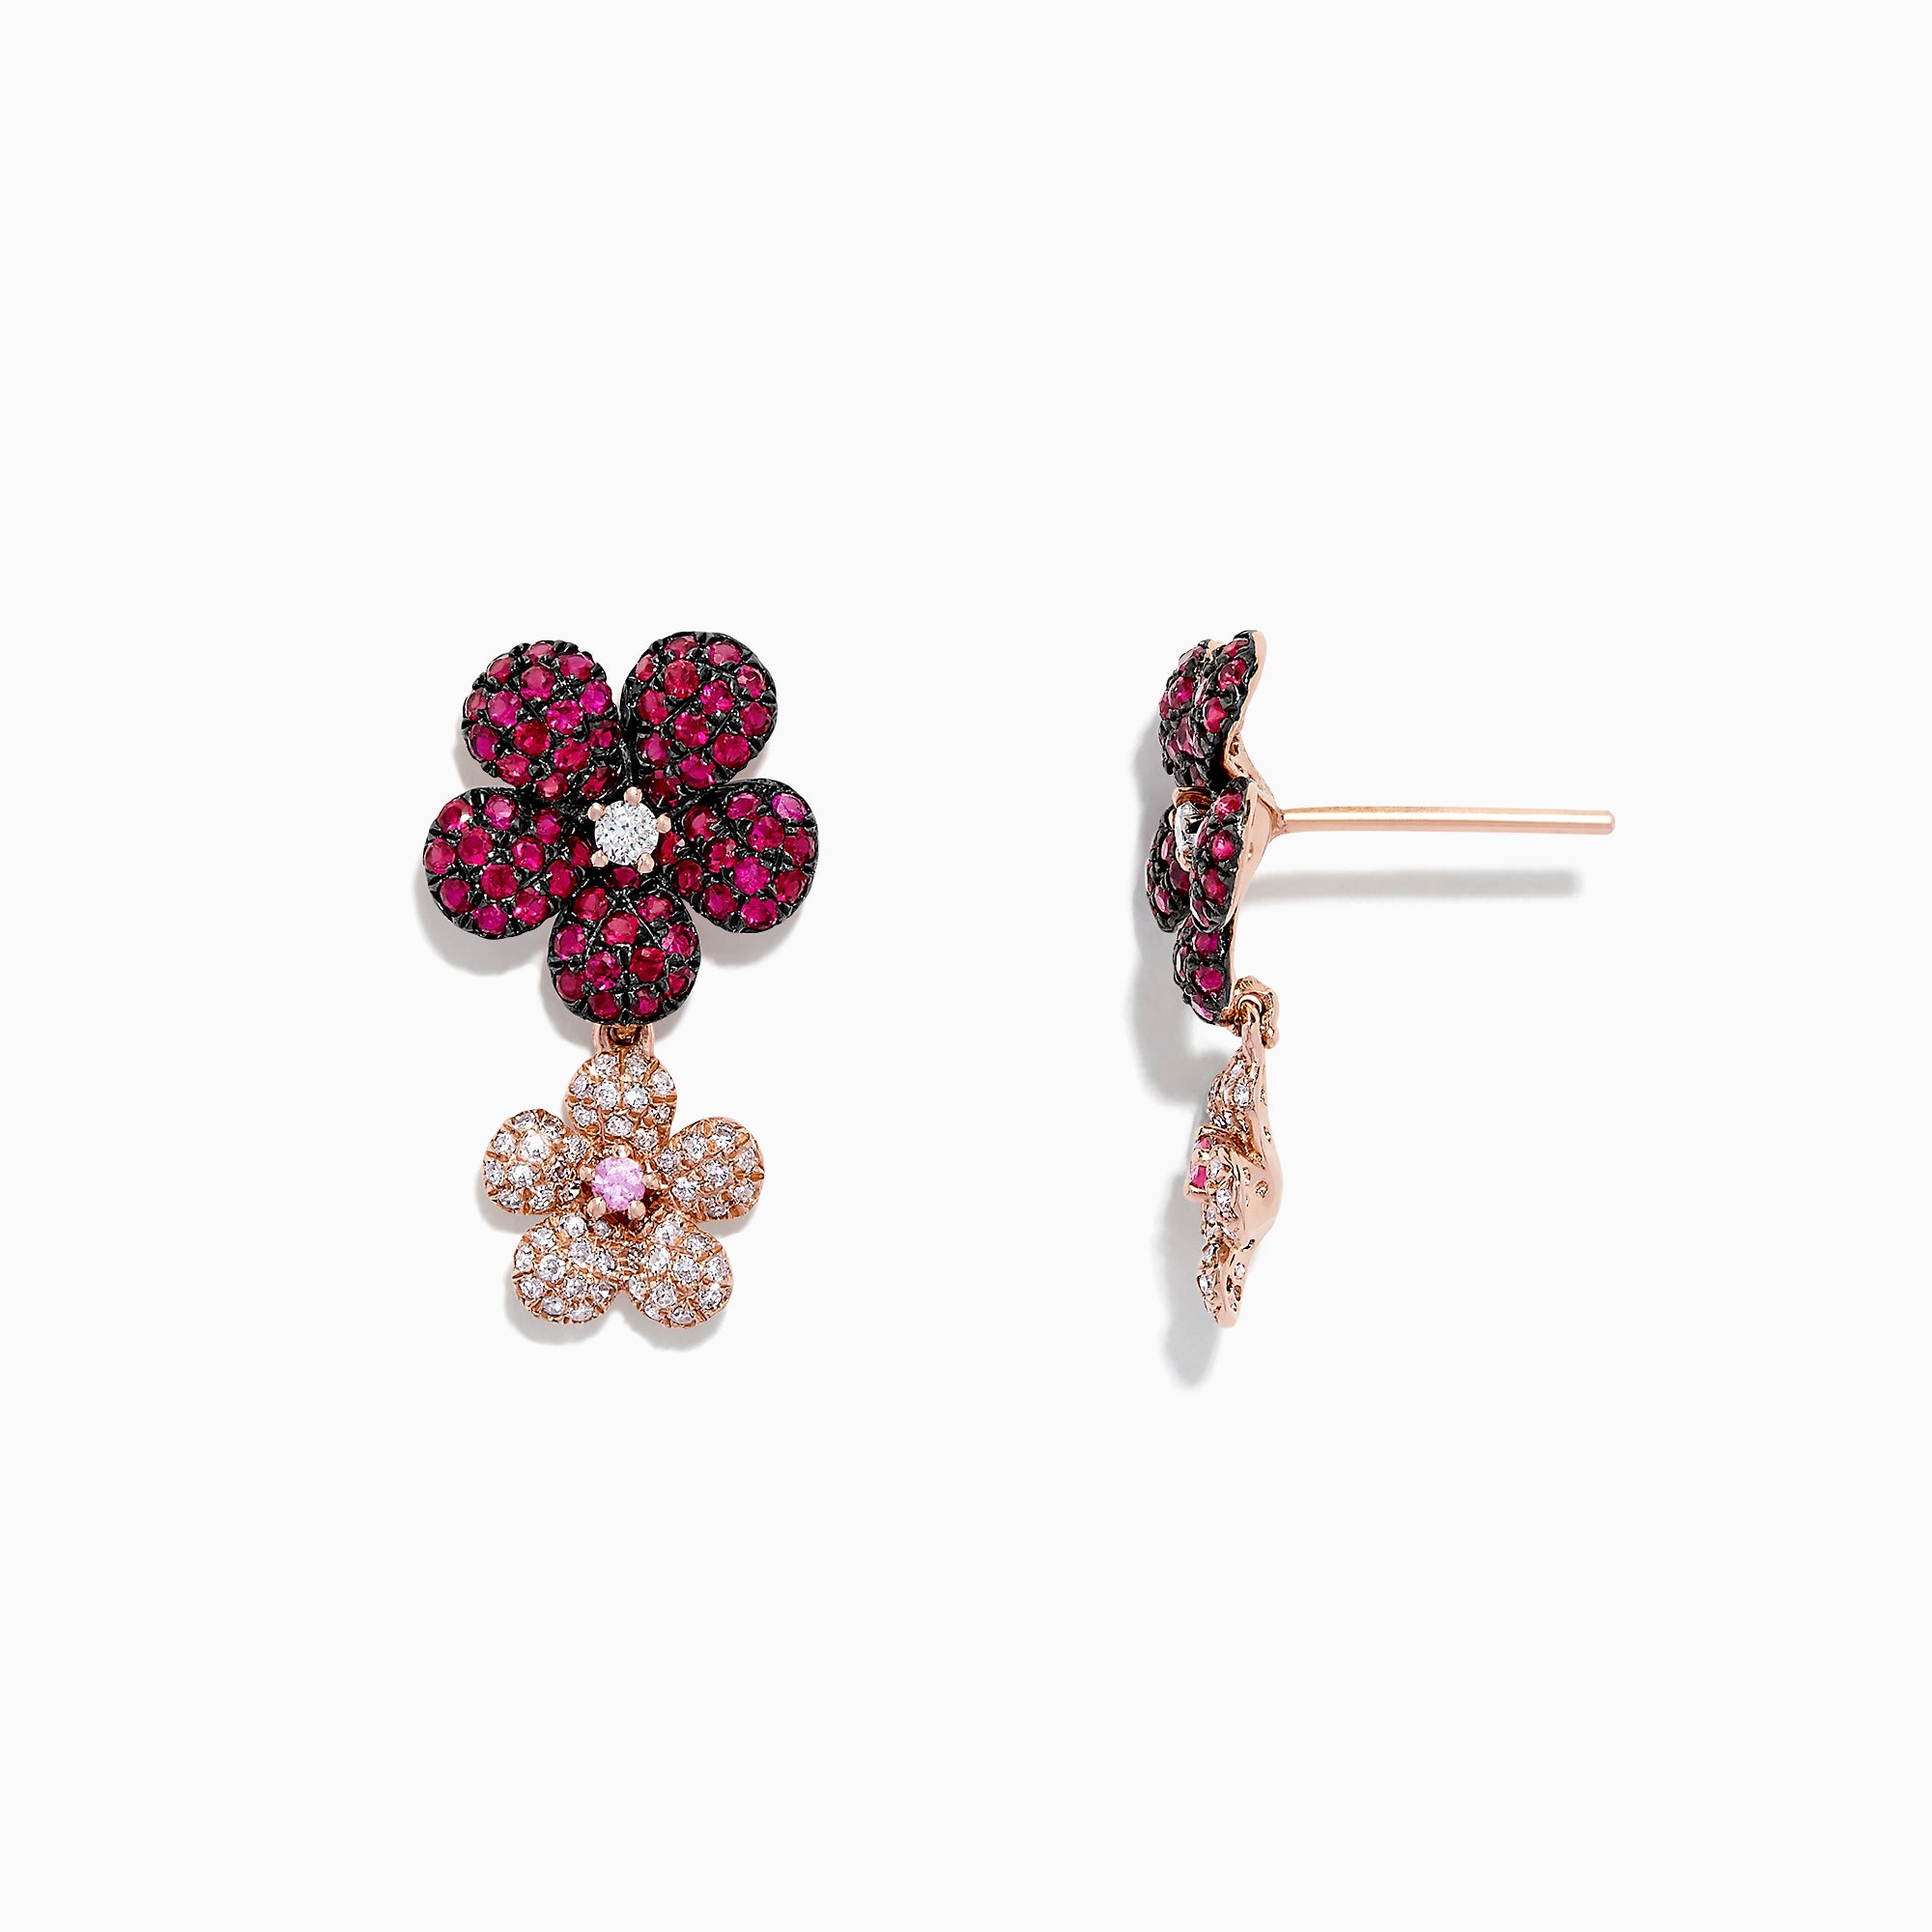 Effy Nature 14K Gold Ruby, Sapphire & Diamond Flowers Earrings, 1.80 TCW